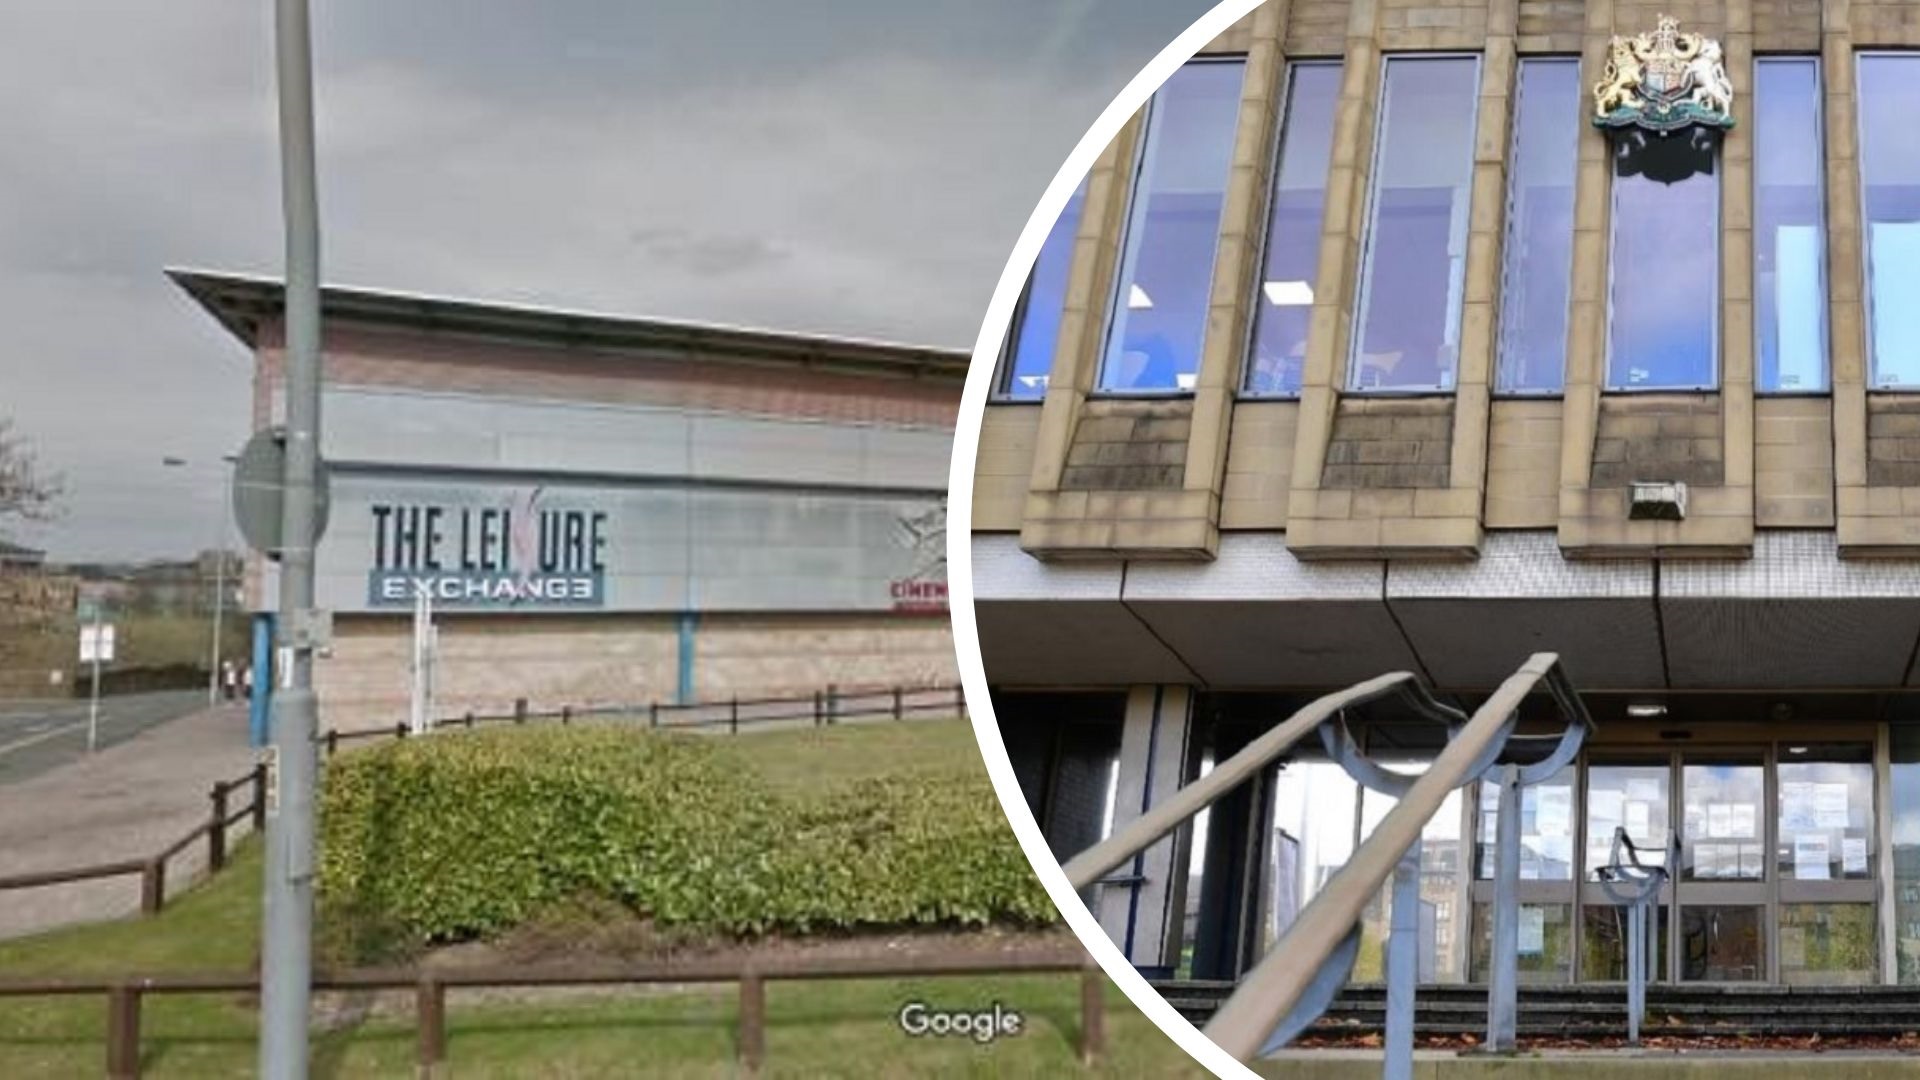 Man in court over assault at Leisure Exchange in Bradford